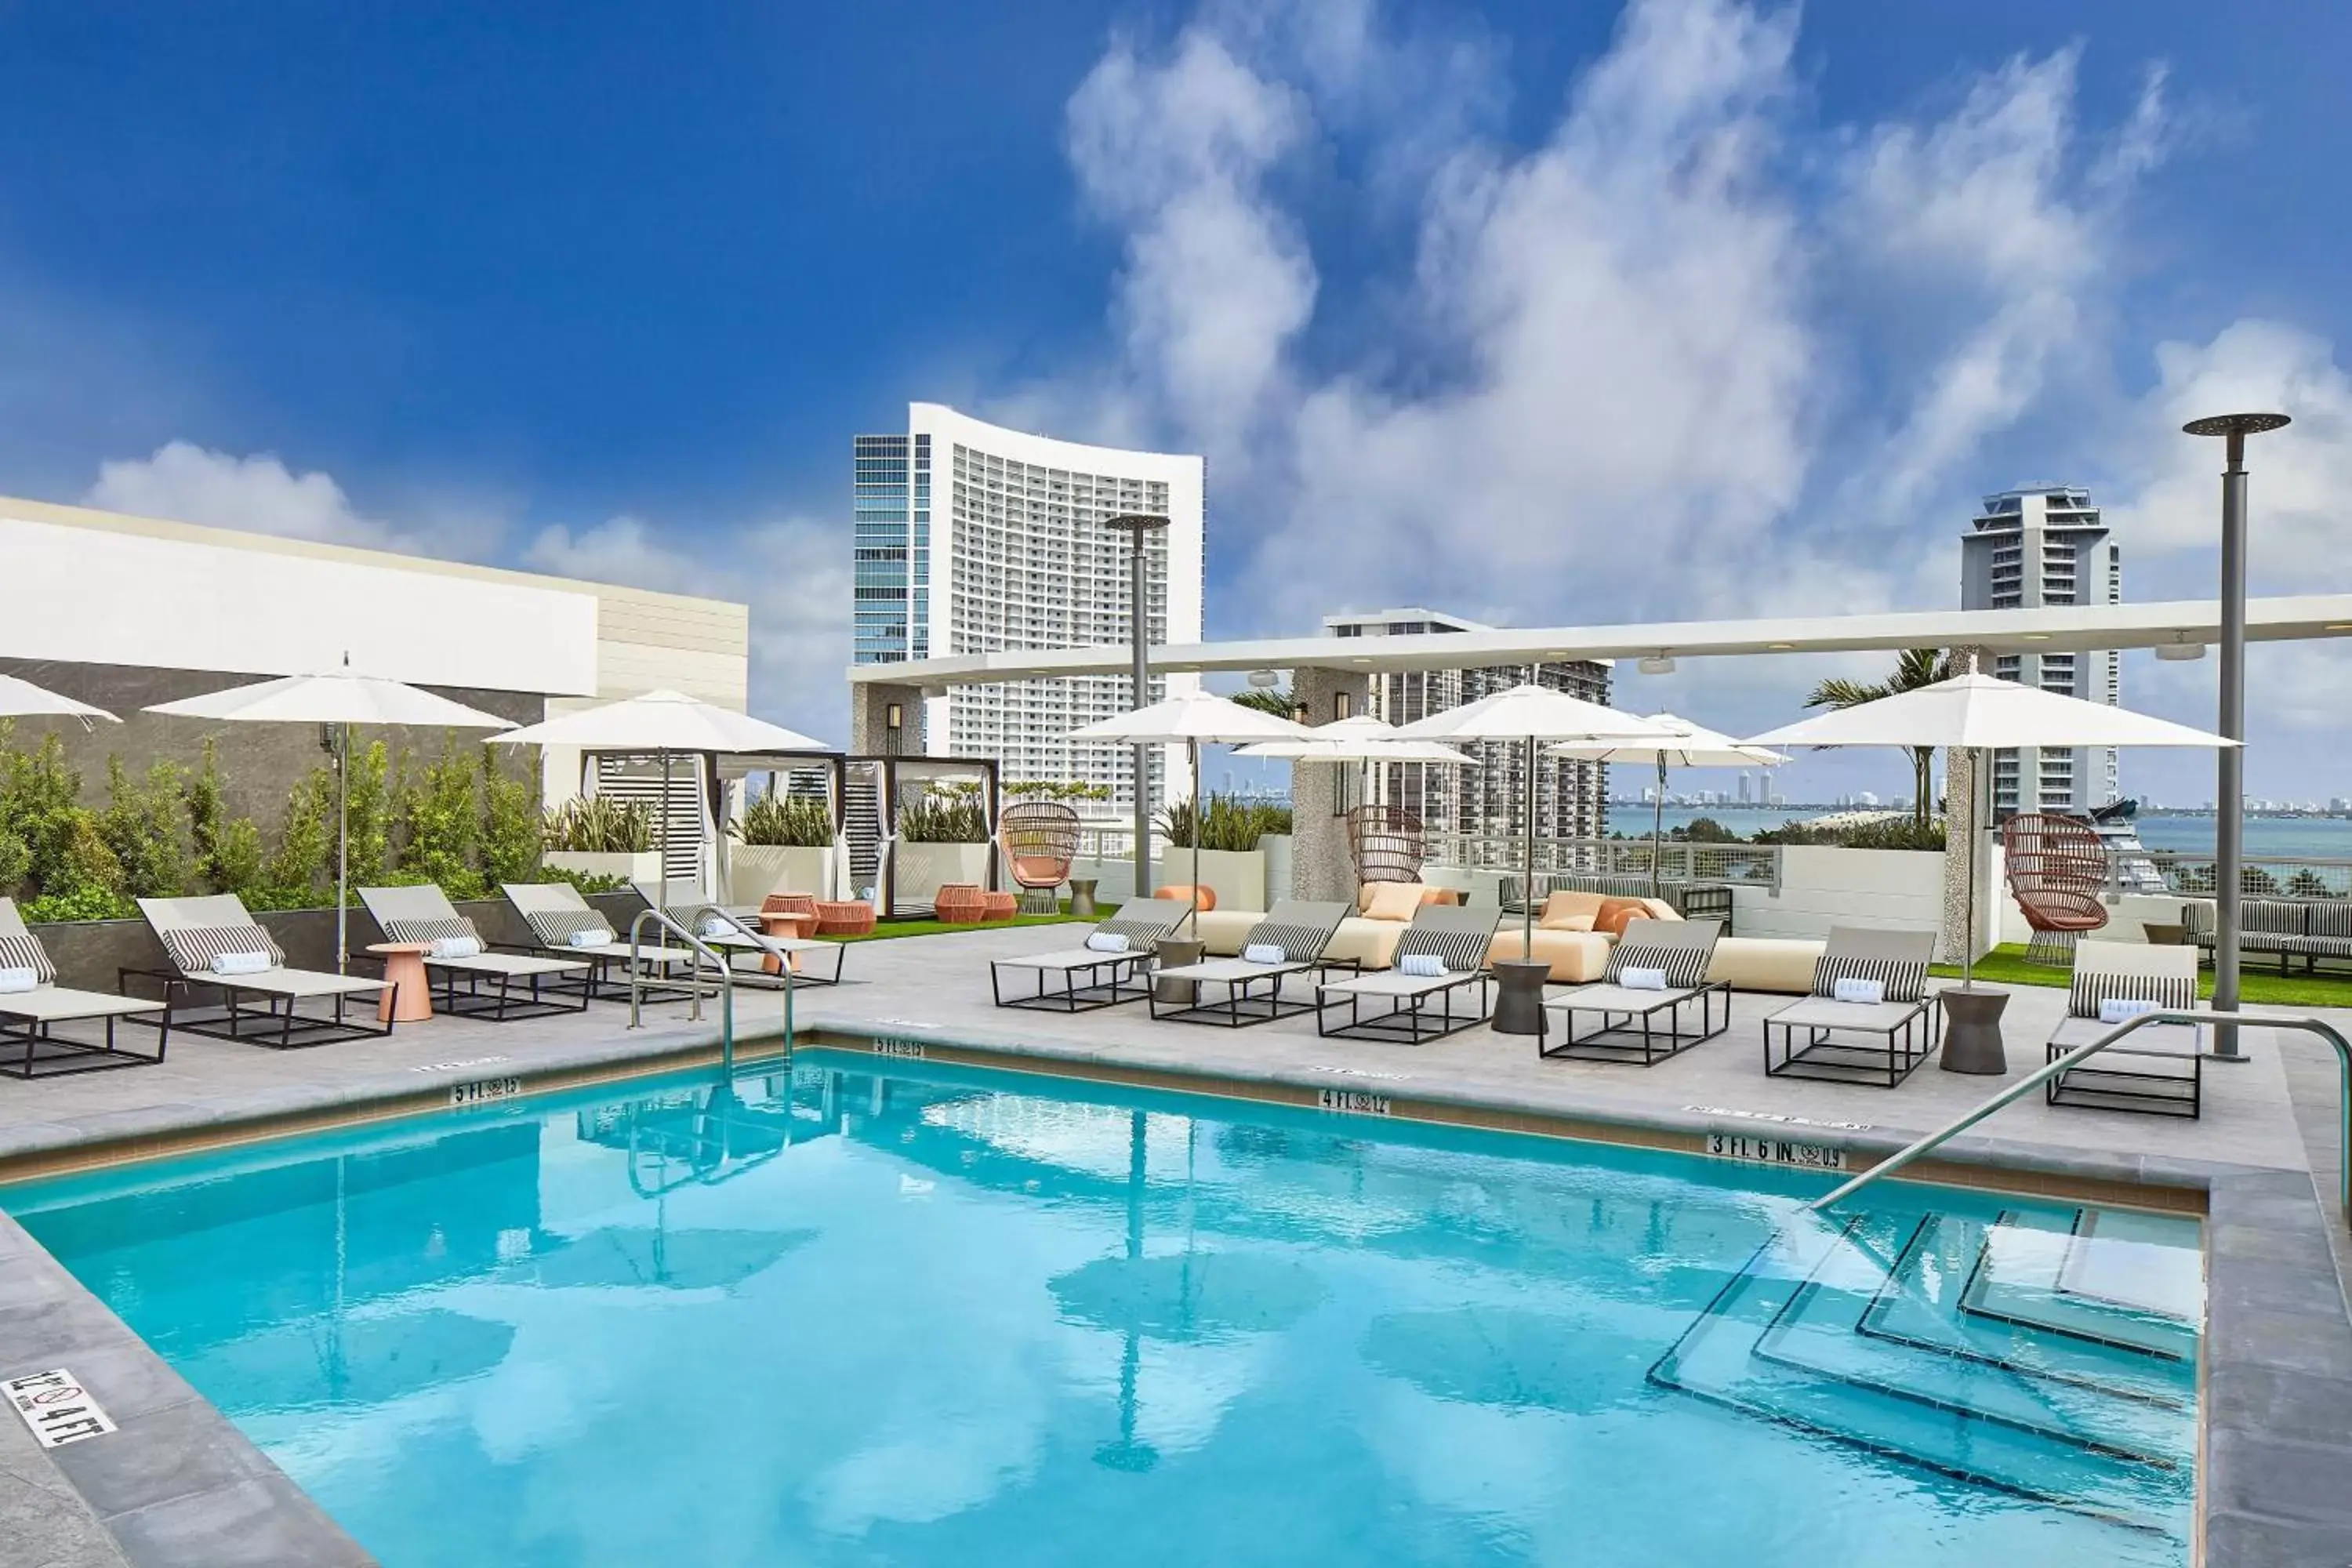 Swimming Pool in AC Hotel Miami Wynwood